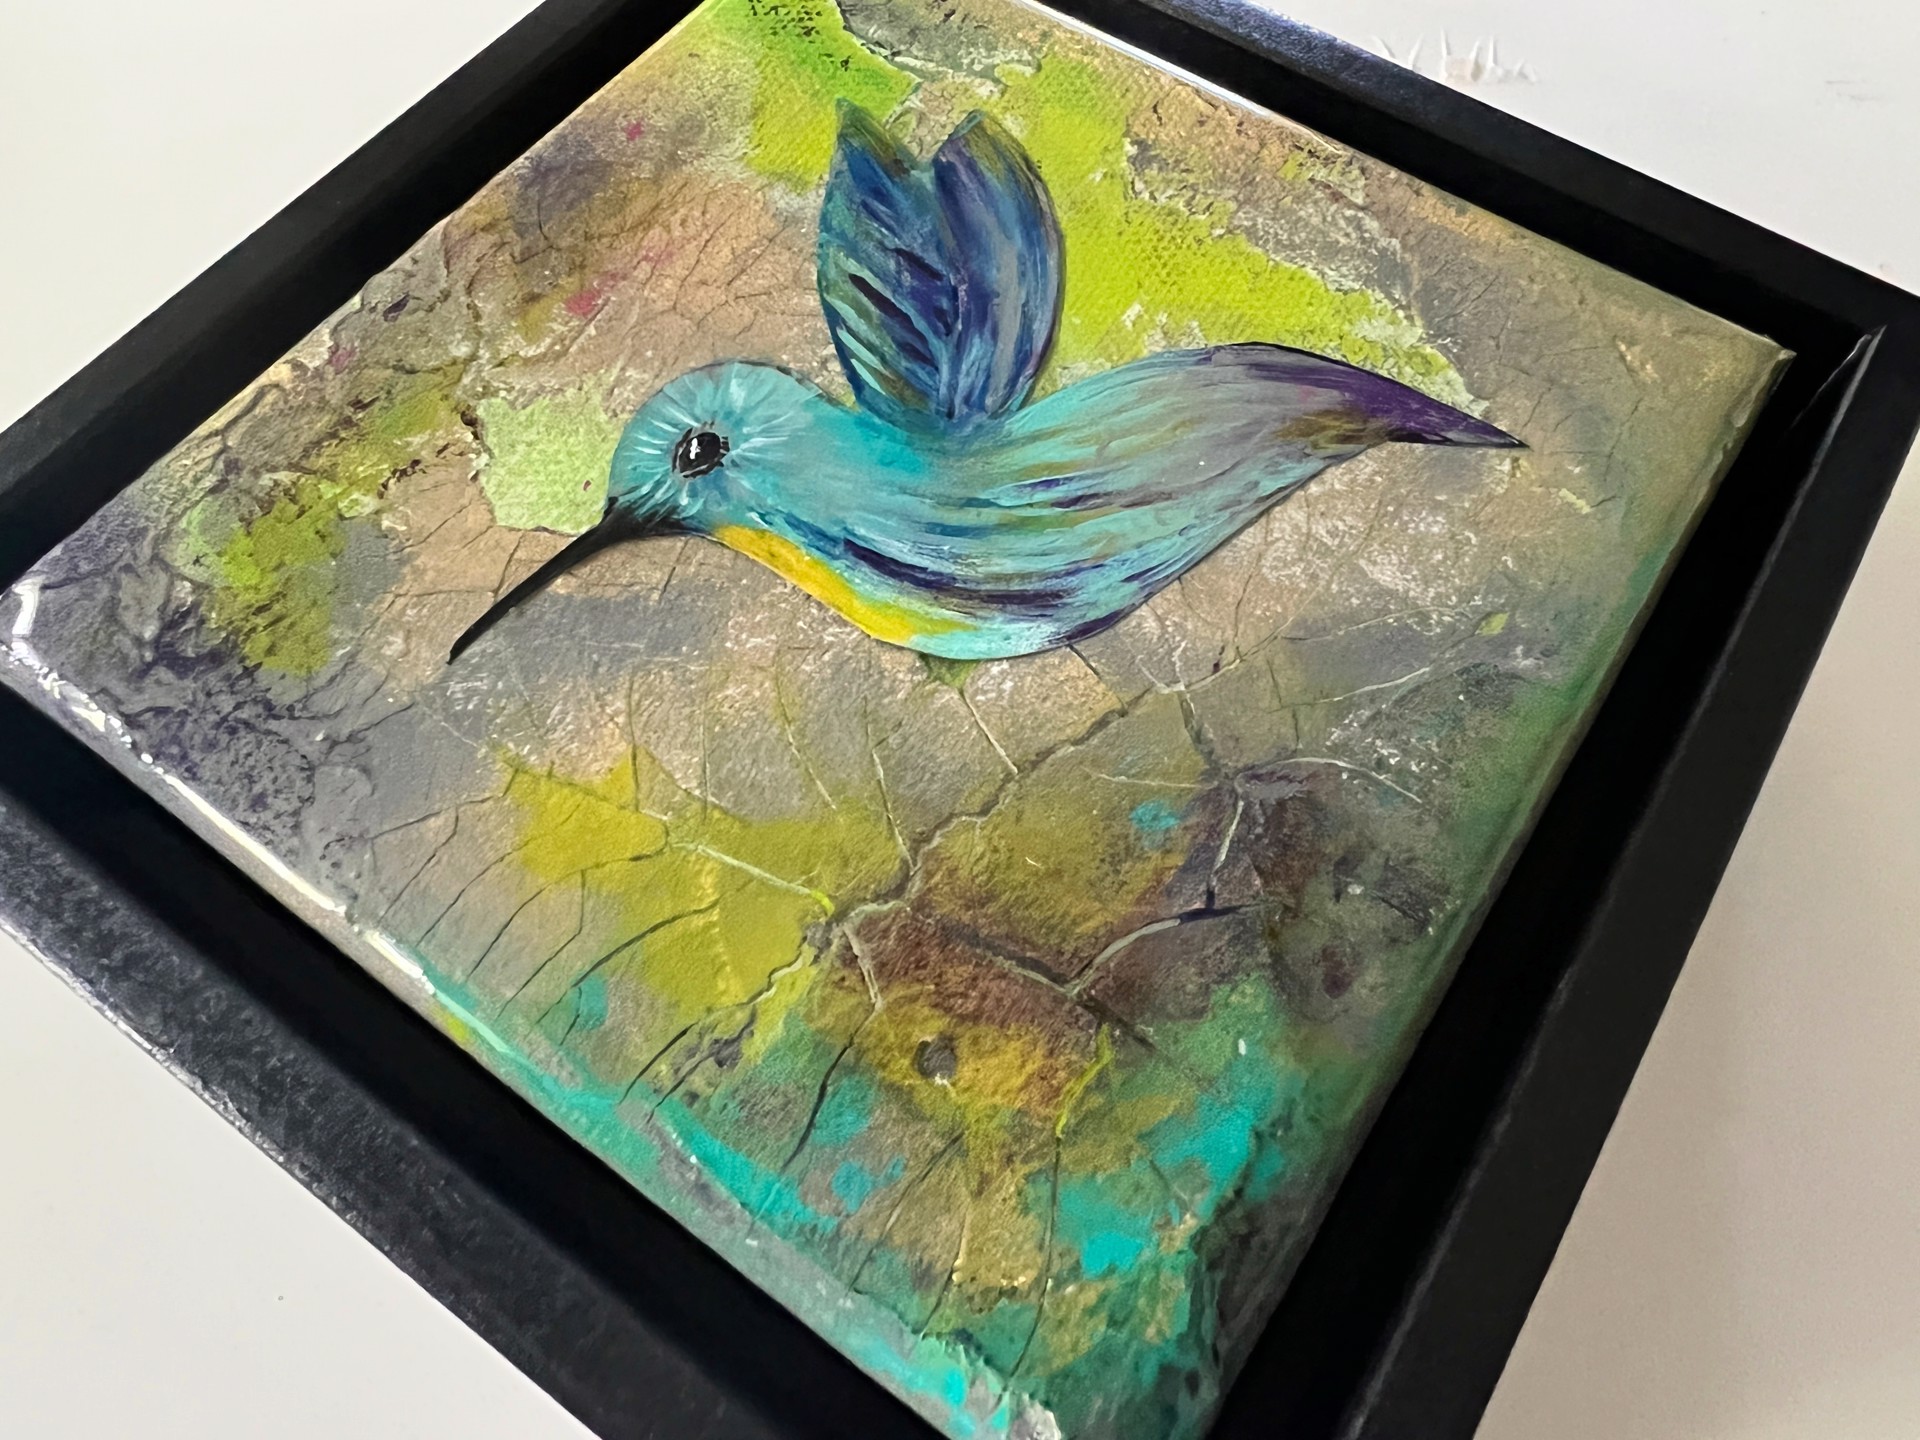 Hummingbird #2 by Ana Hefco